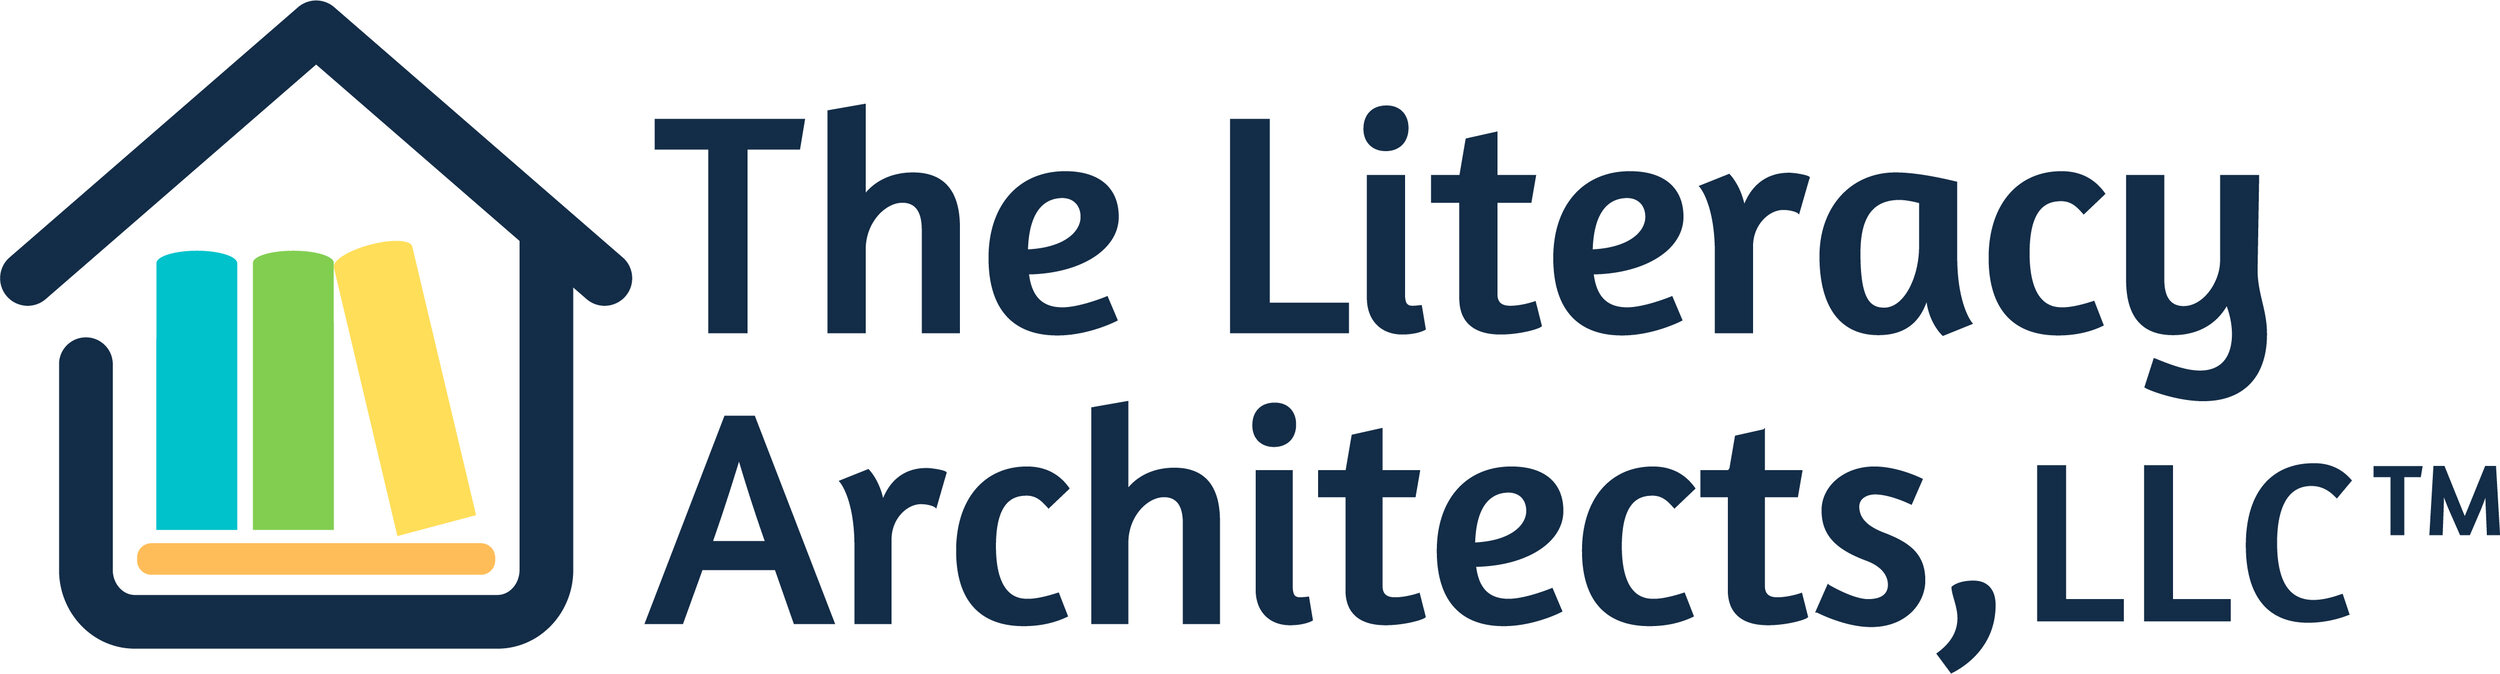 The Literacy Architects - Logo (1).jpg